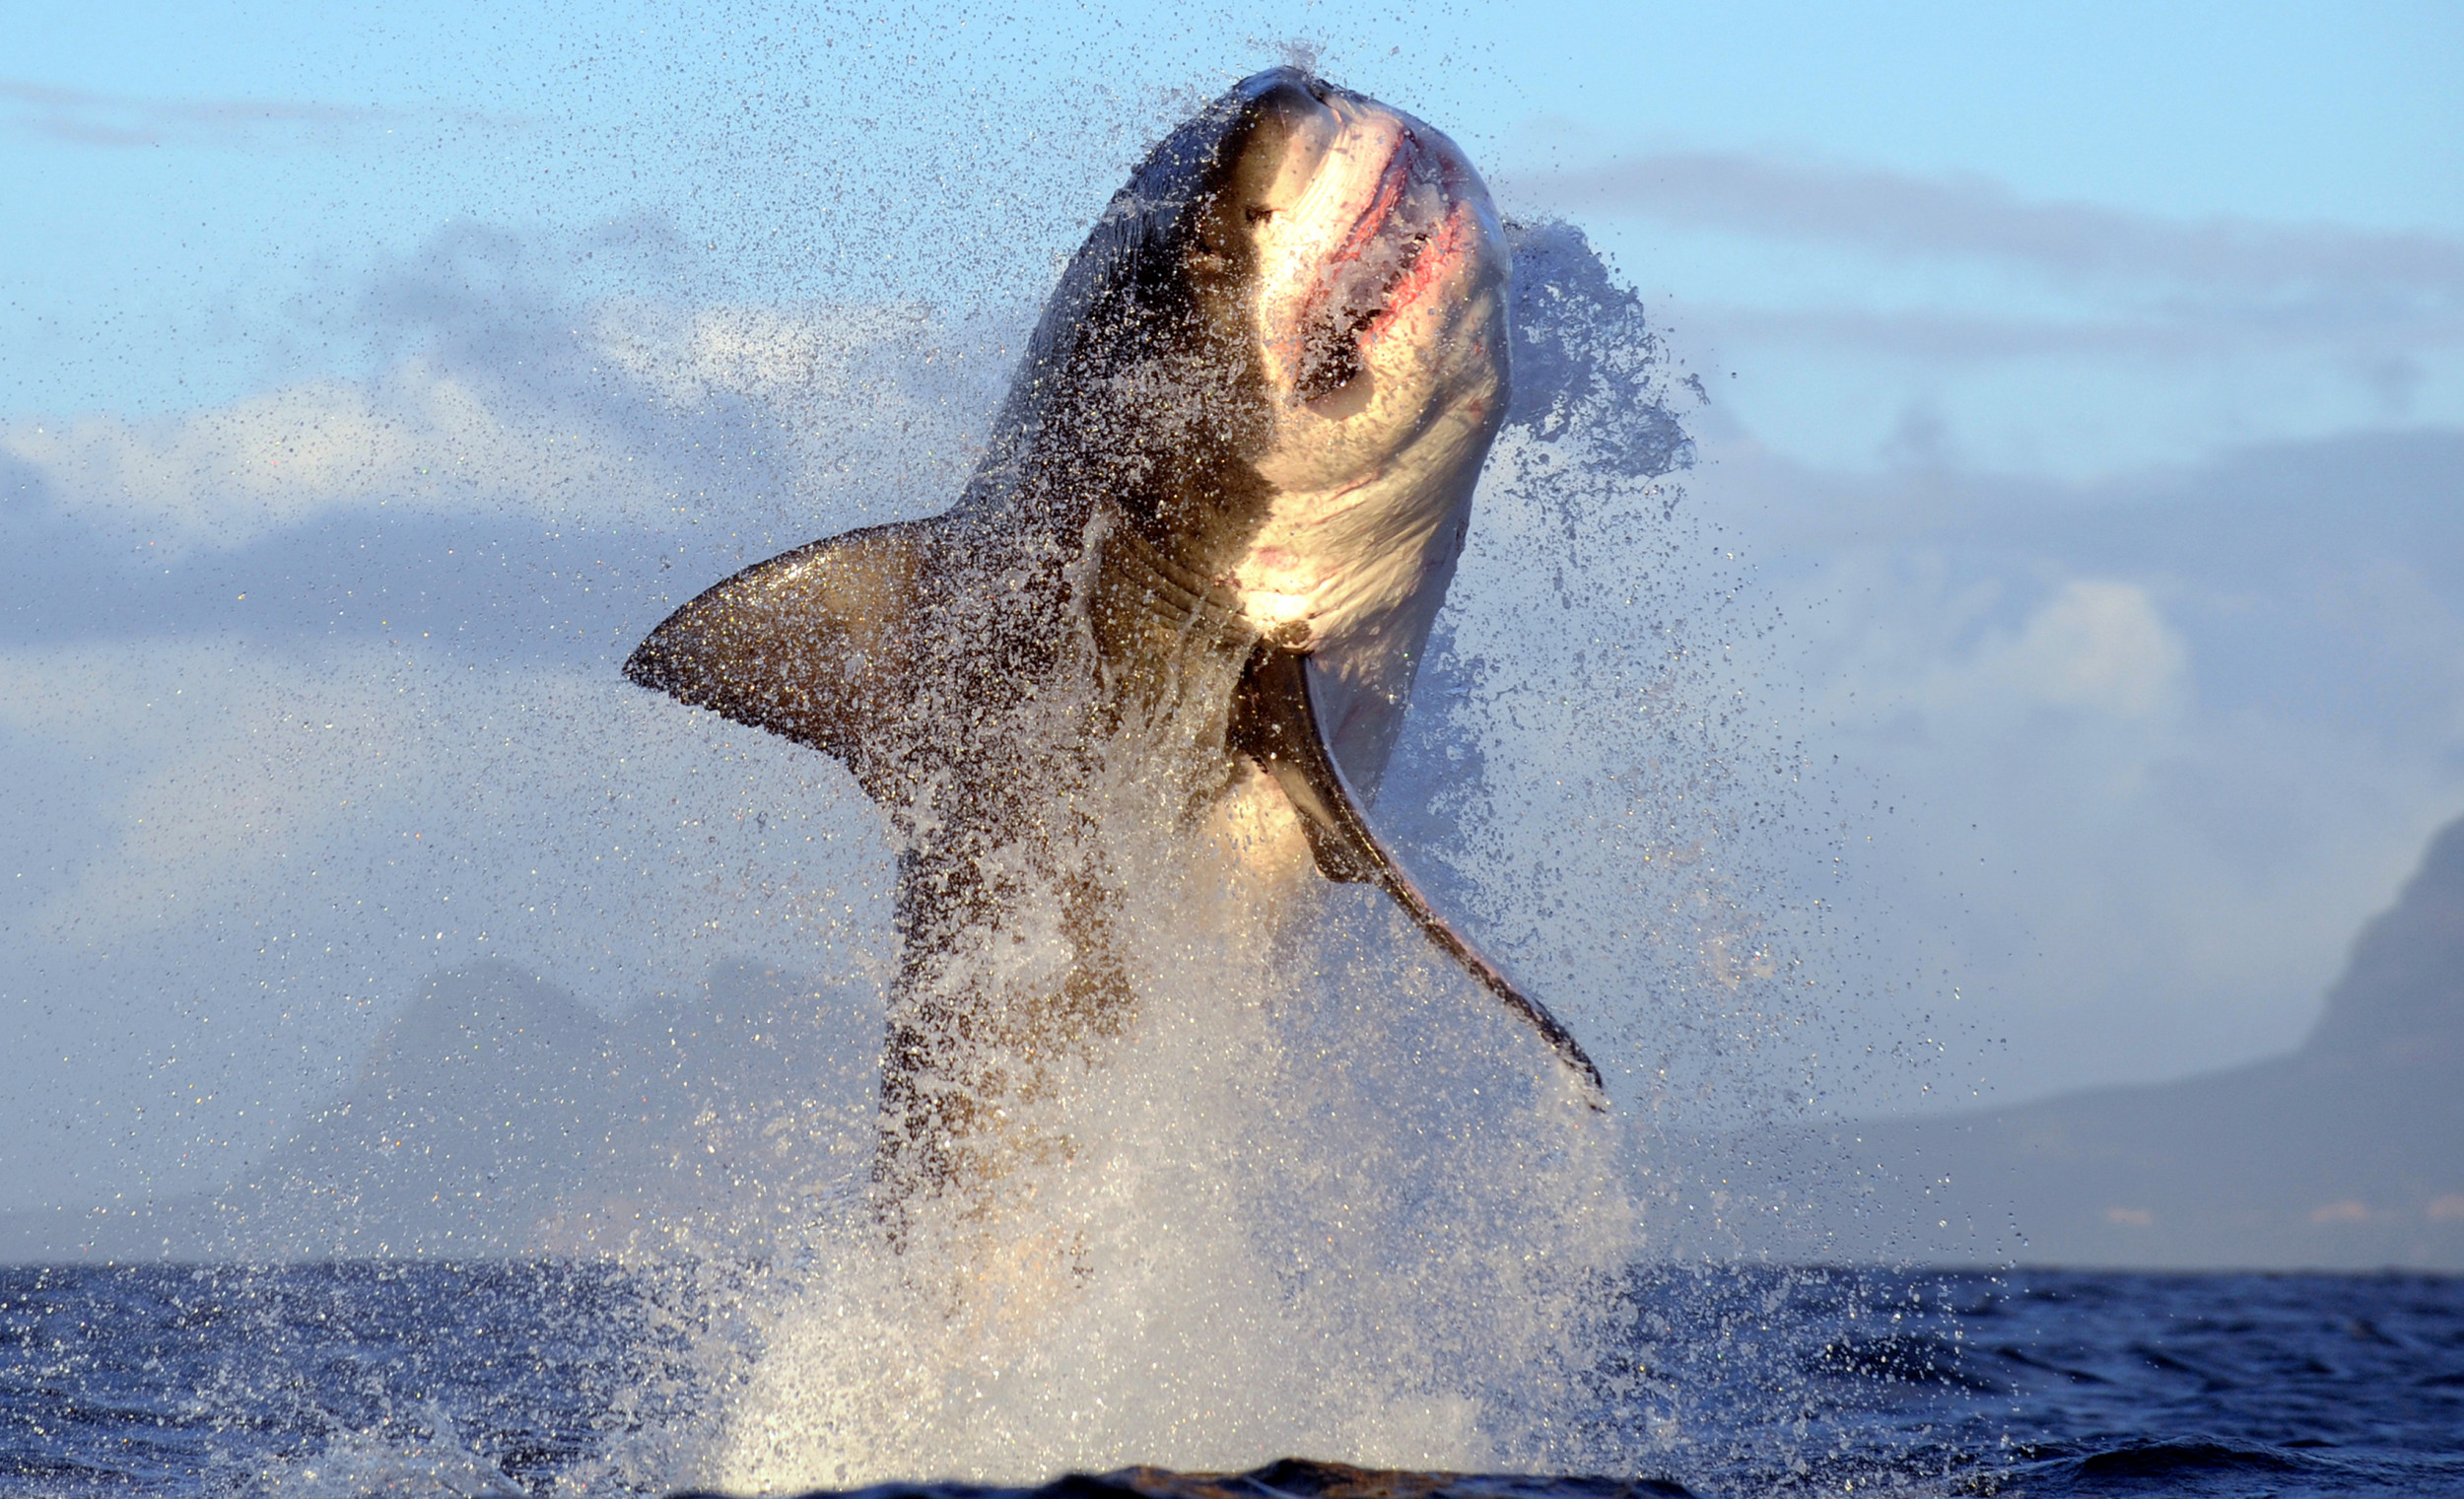 Great White Sharks Including 15-foot, 2,000 Pound Behemoth Are Patrolling U.S. East Coast Hunting Prey - Newsweek